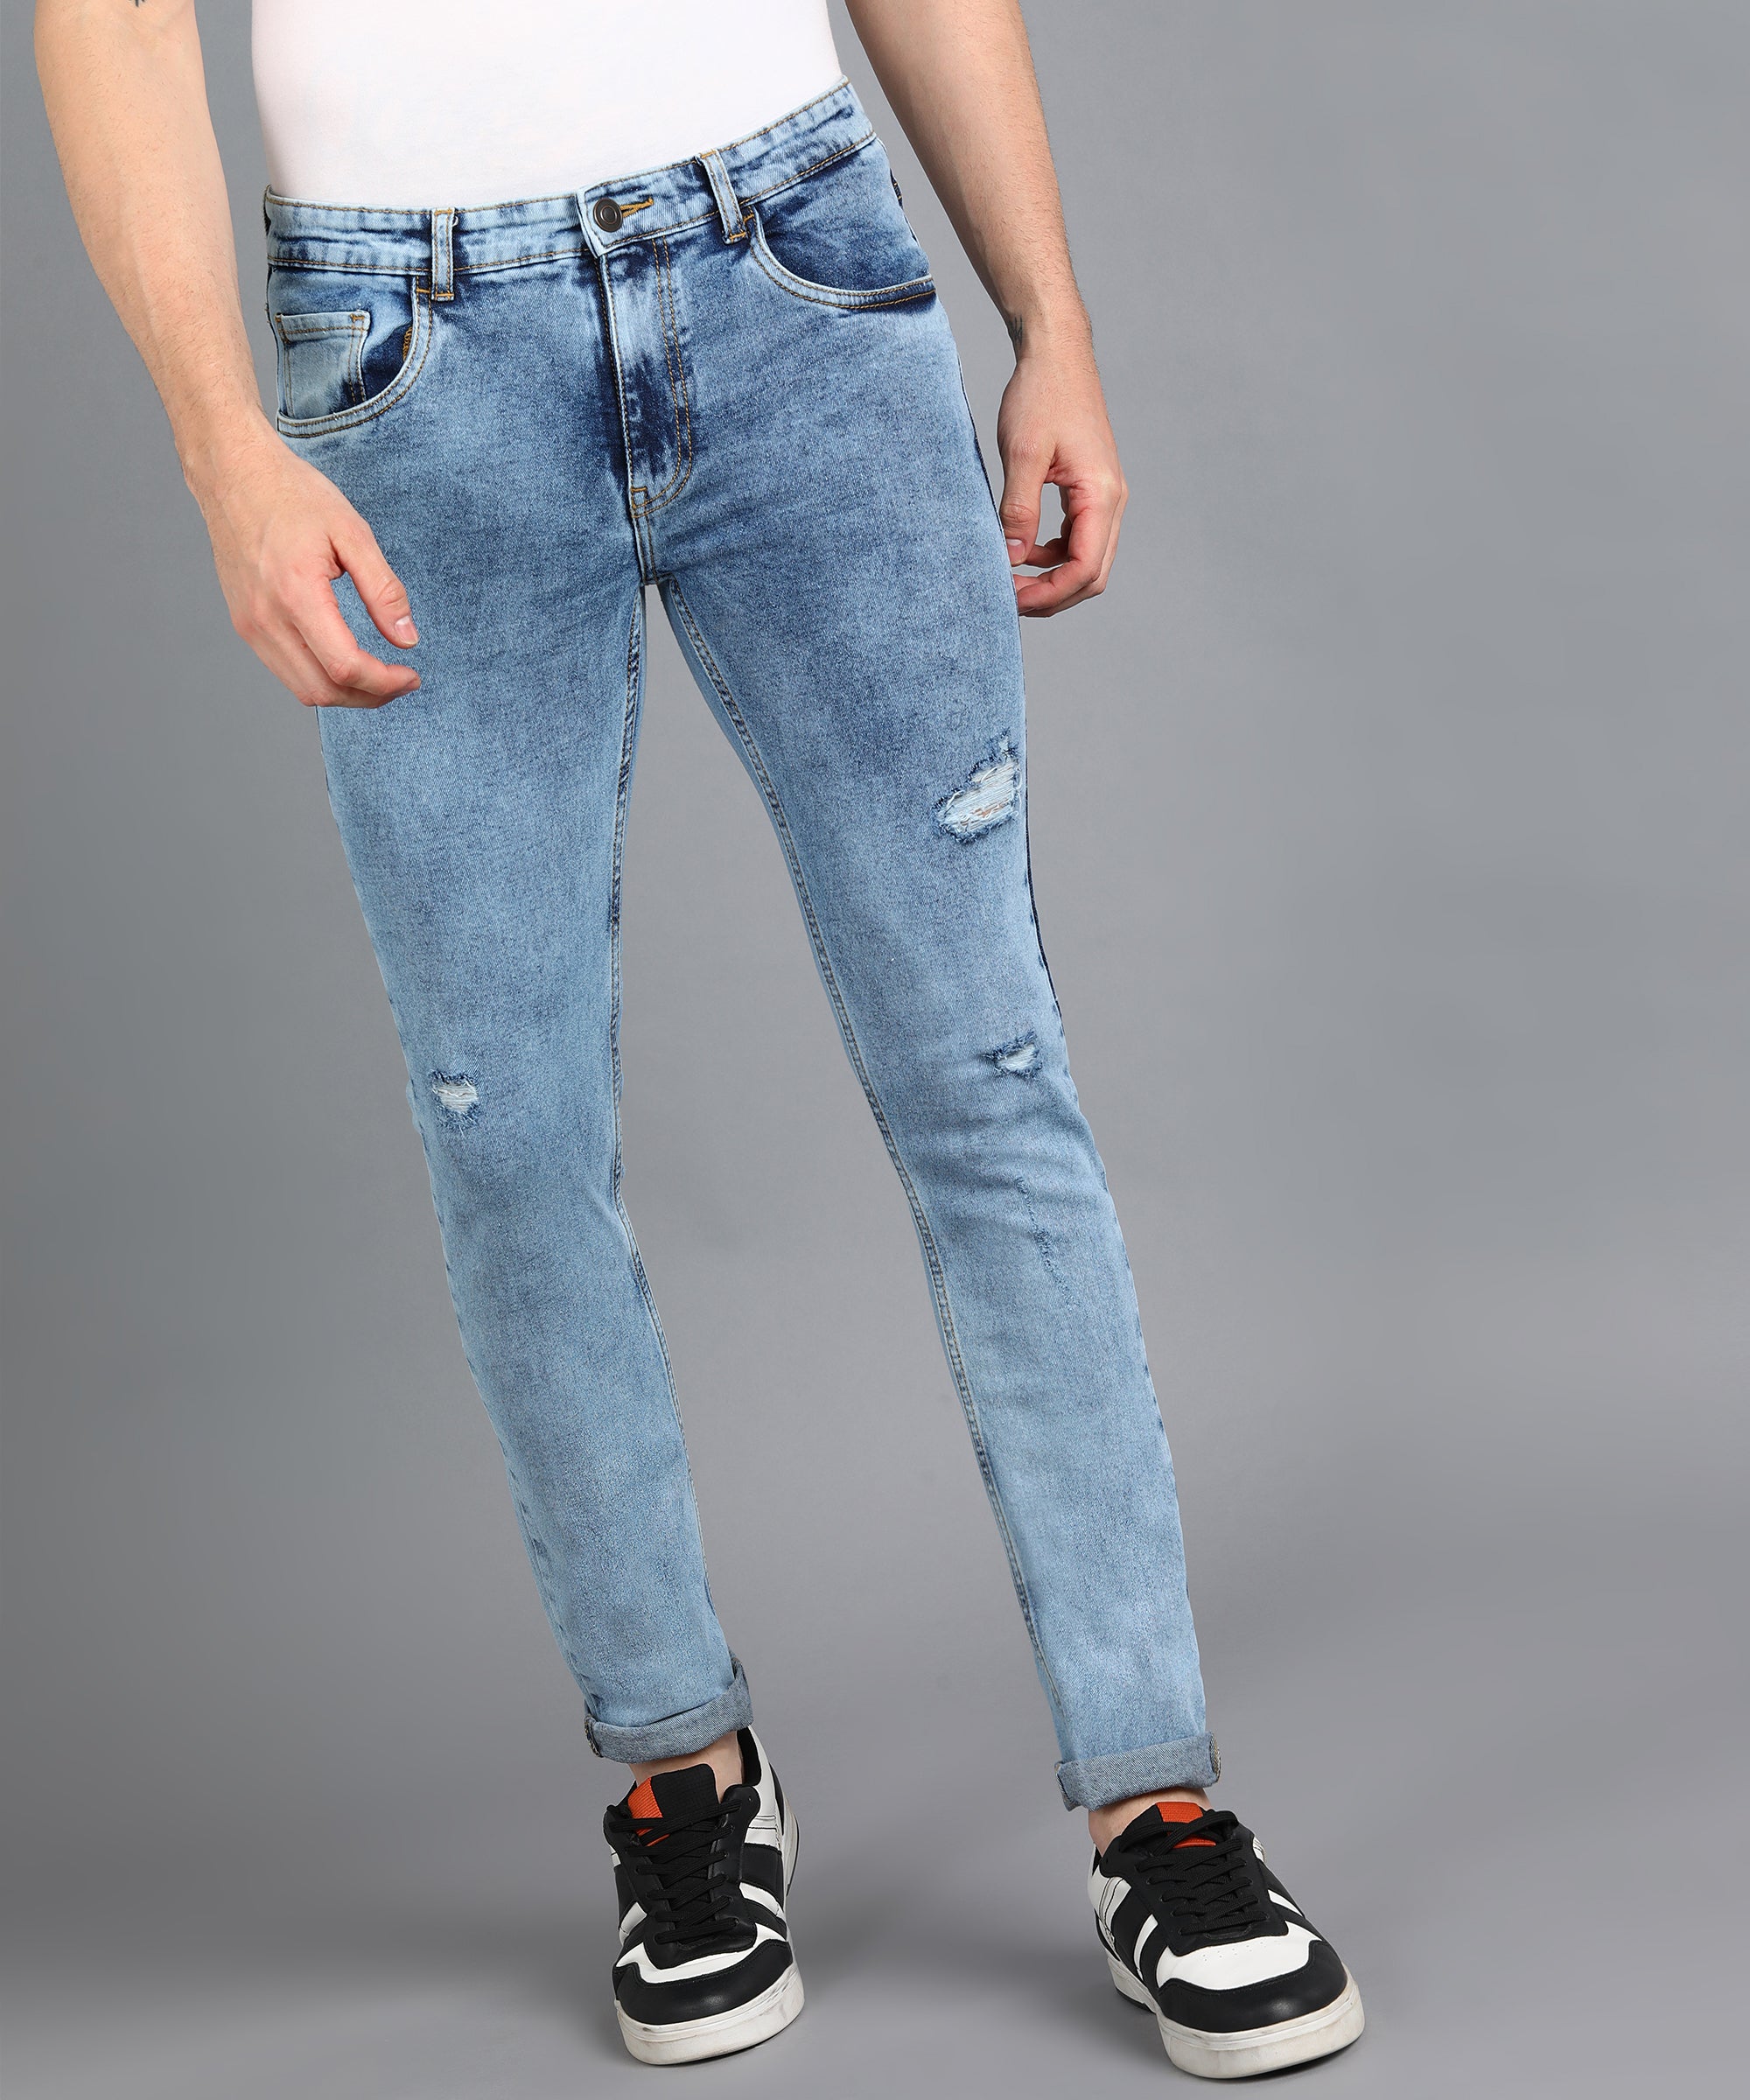 Men's Sky Blue Slim Fit Washed Mild Distressed/Torn Jeans Stretchable